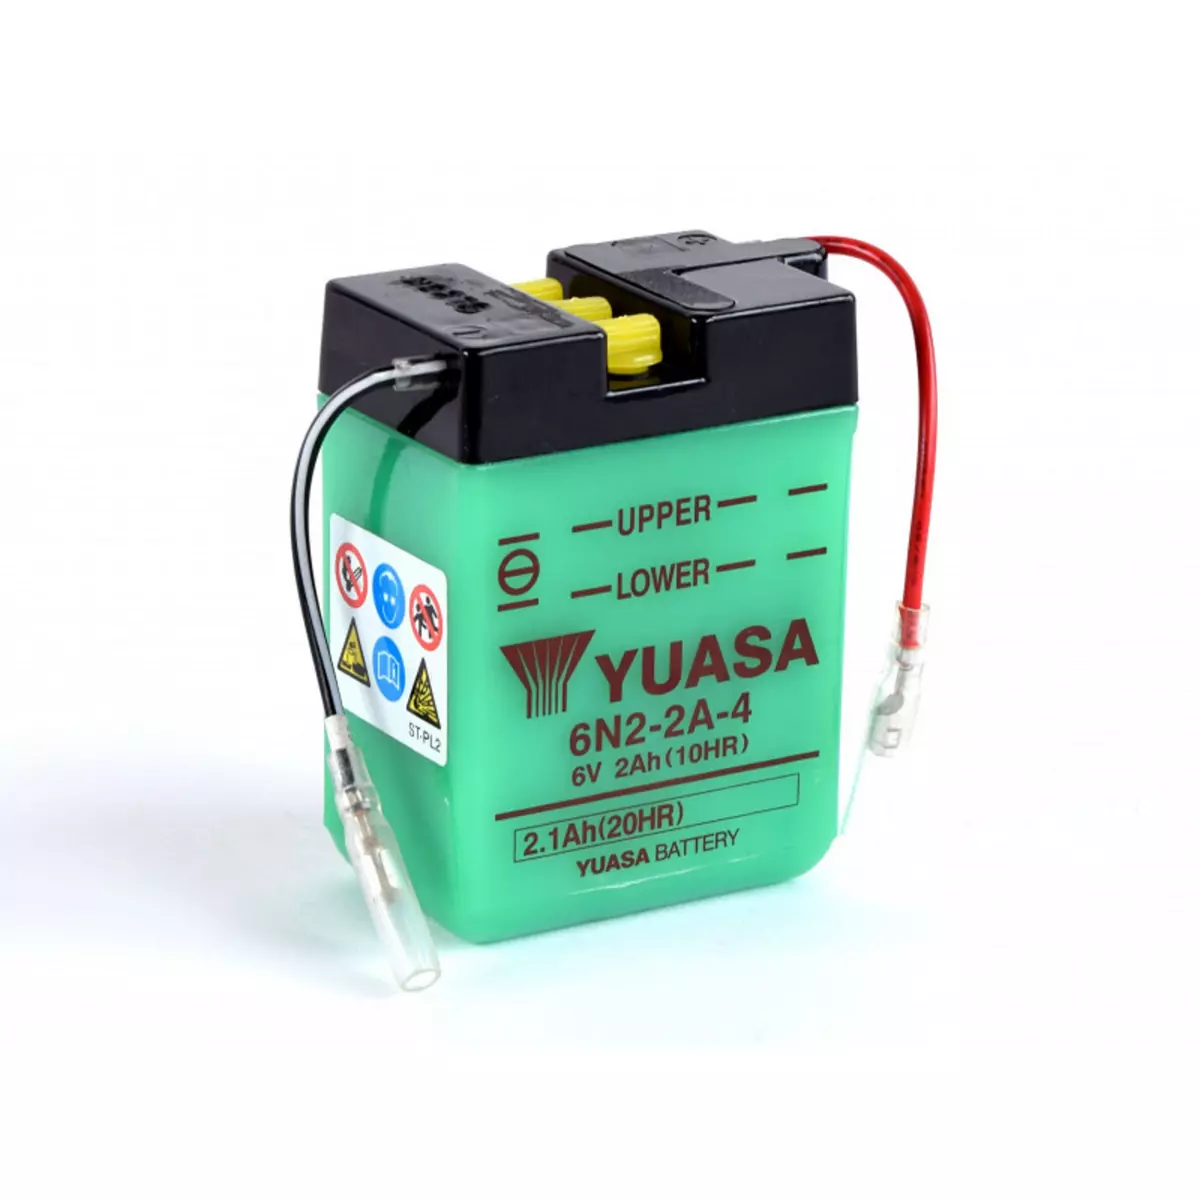 YUASA Batterie moto YUASA 6N2-2A-4 6V 2.1AH